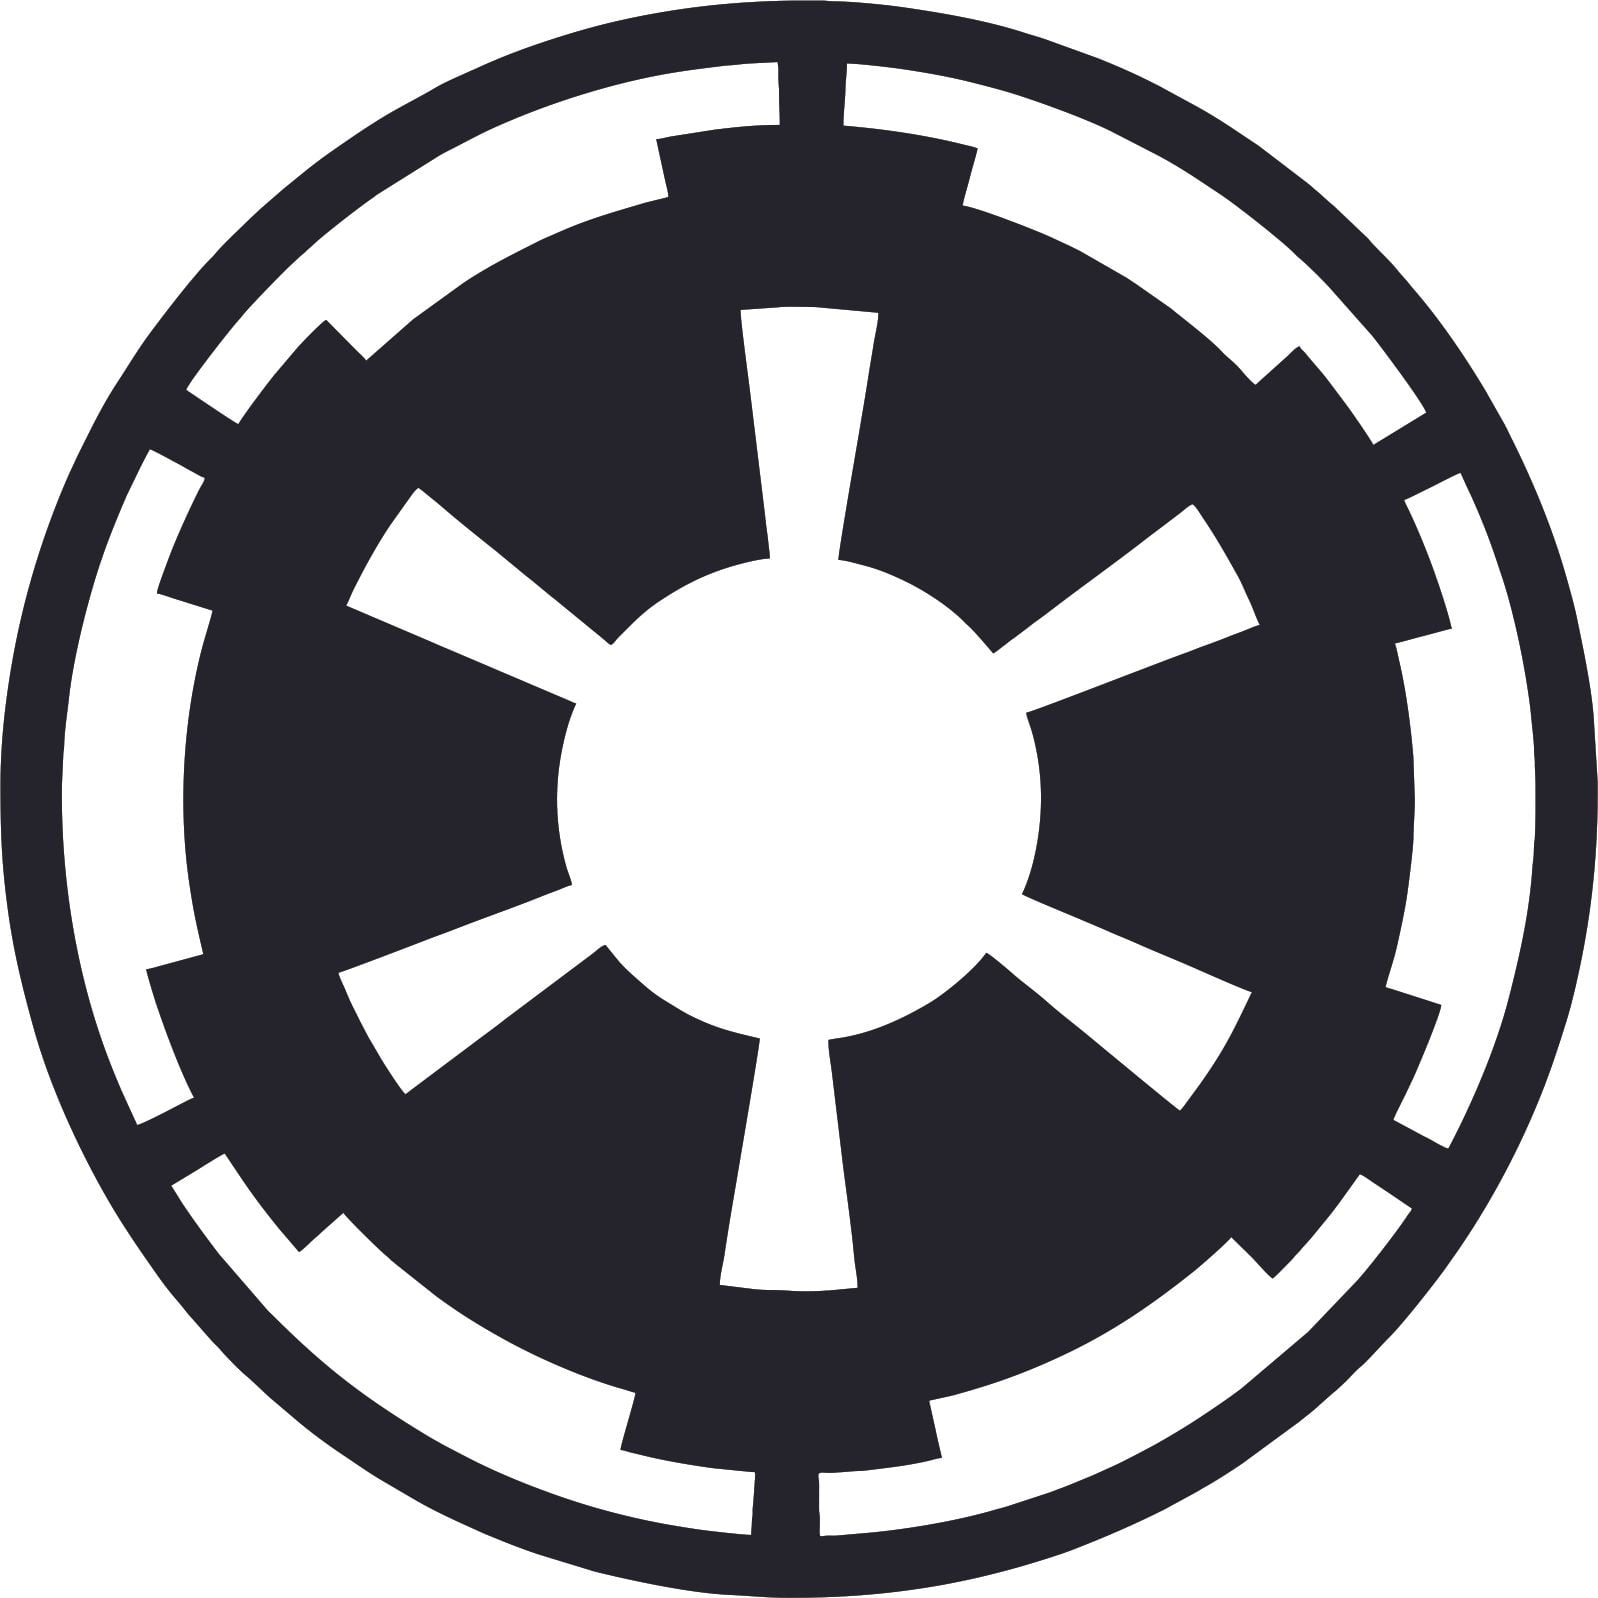 Star Wars Imperial Seal Symbol Cartoon Character Wall Art Vinyl Sticker